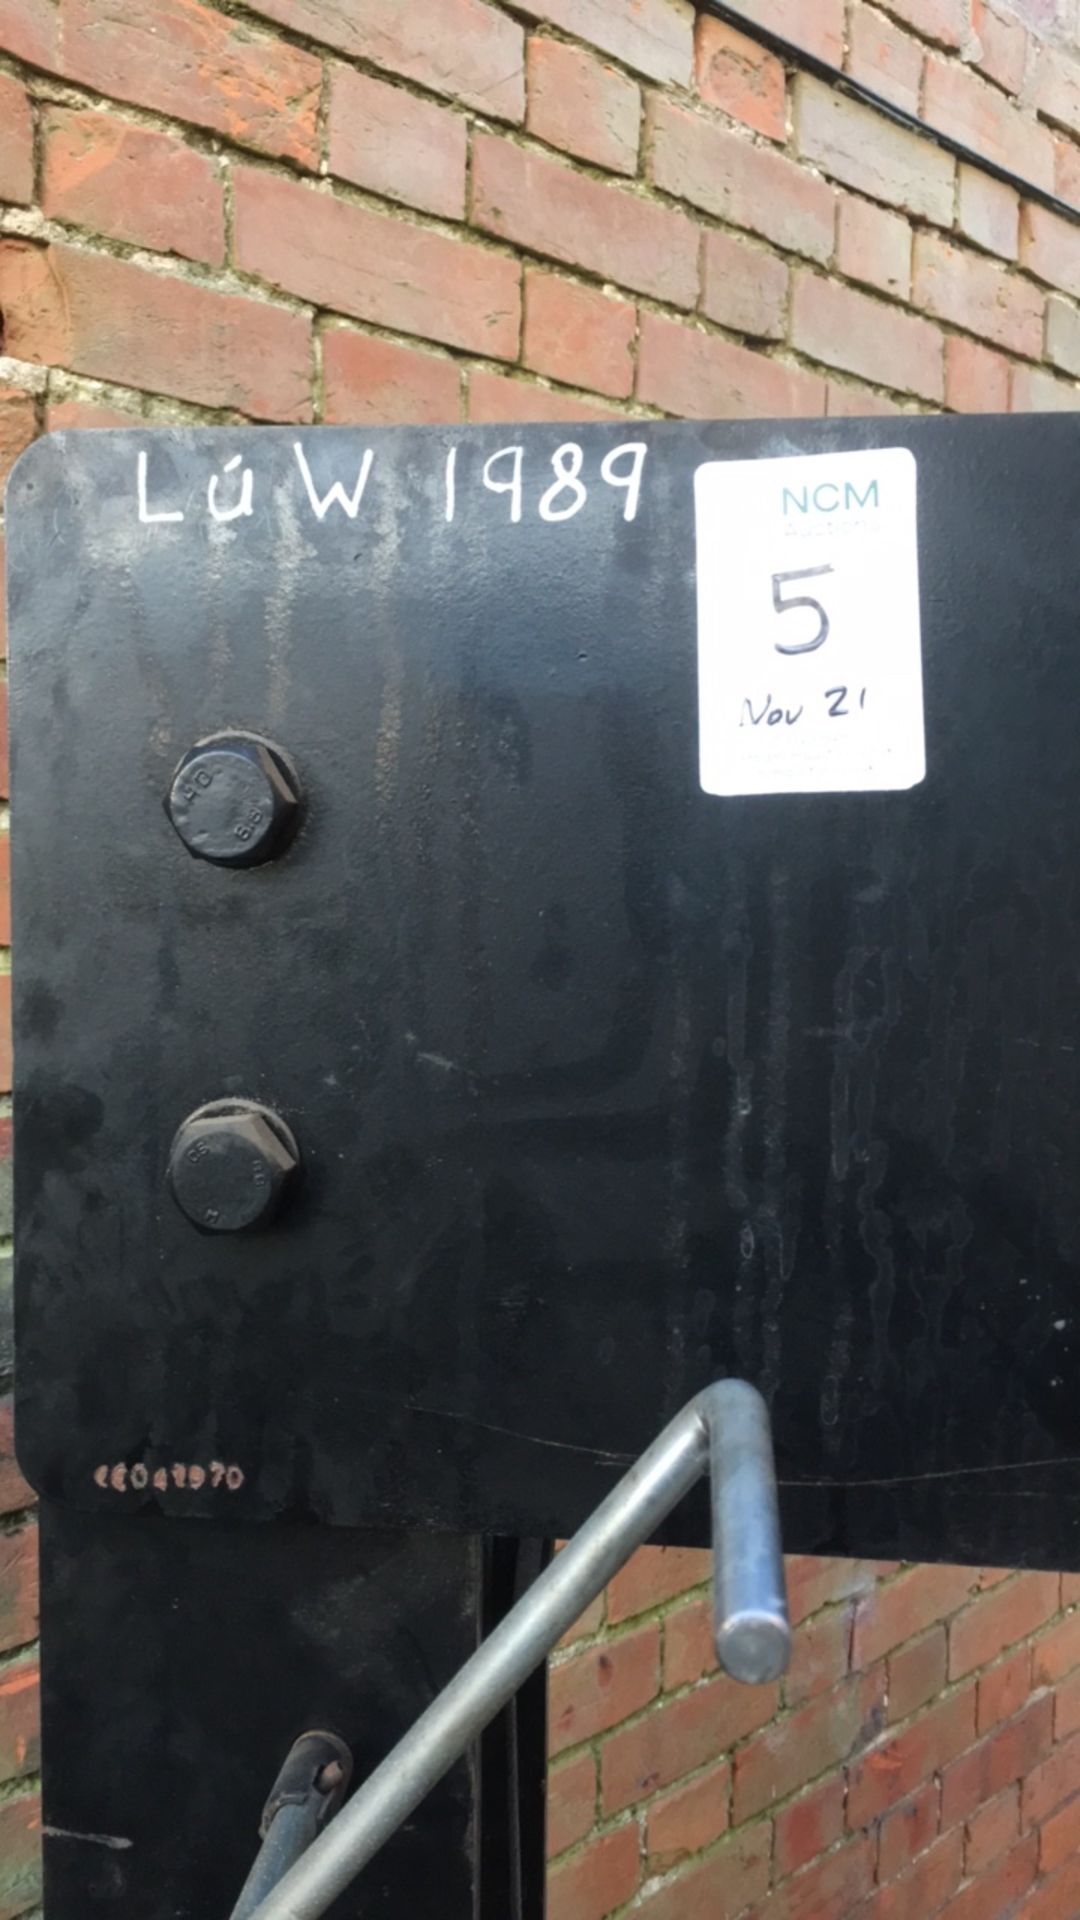 Hydraulic 30 Ton press (LuW1989) - Image 3 of 3